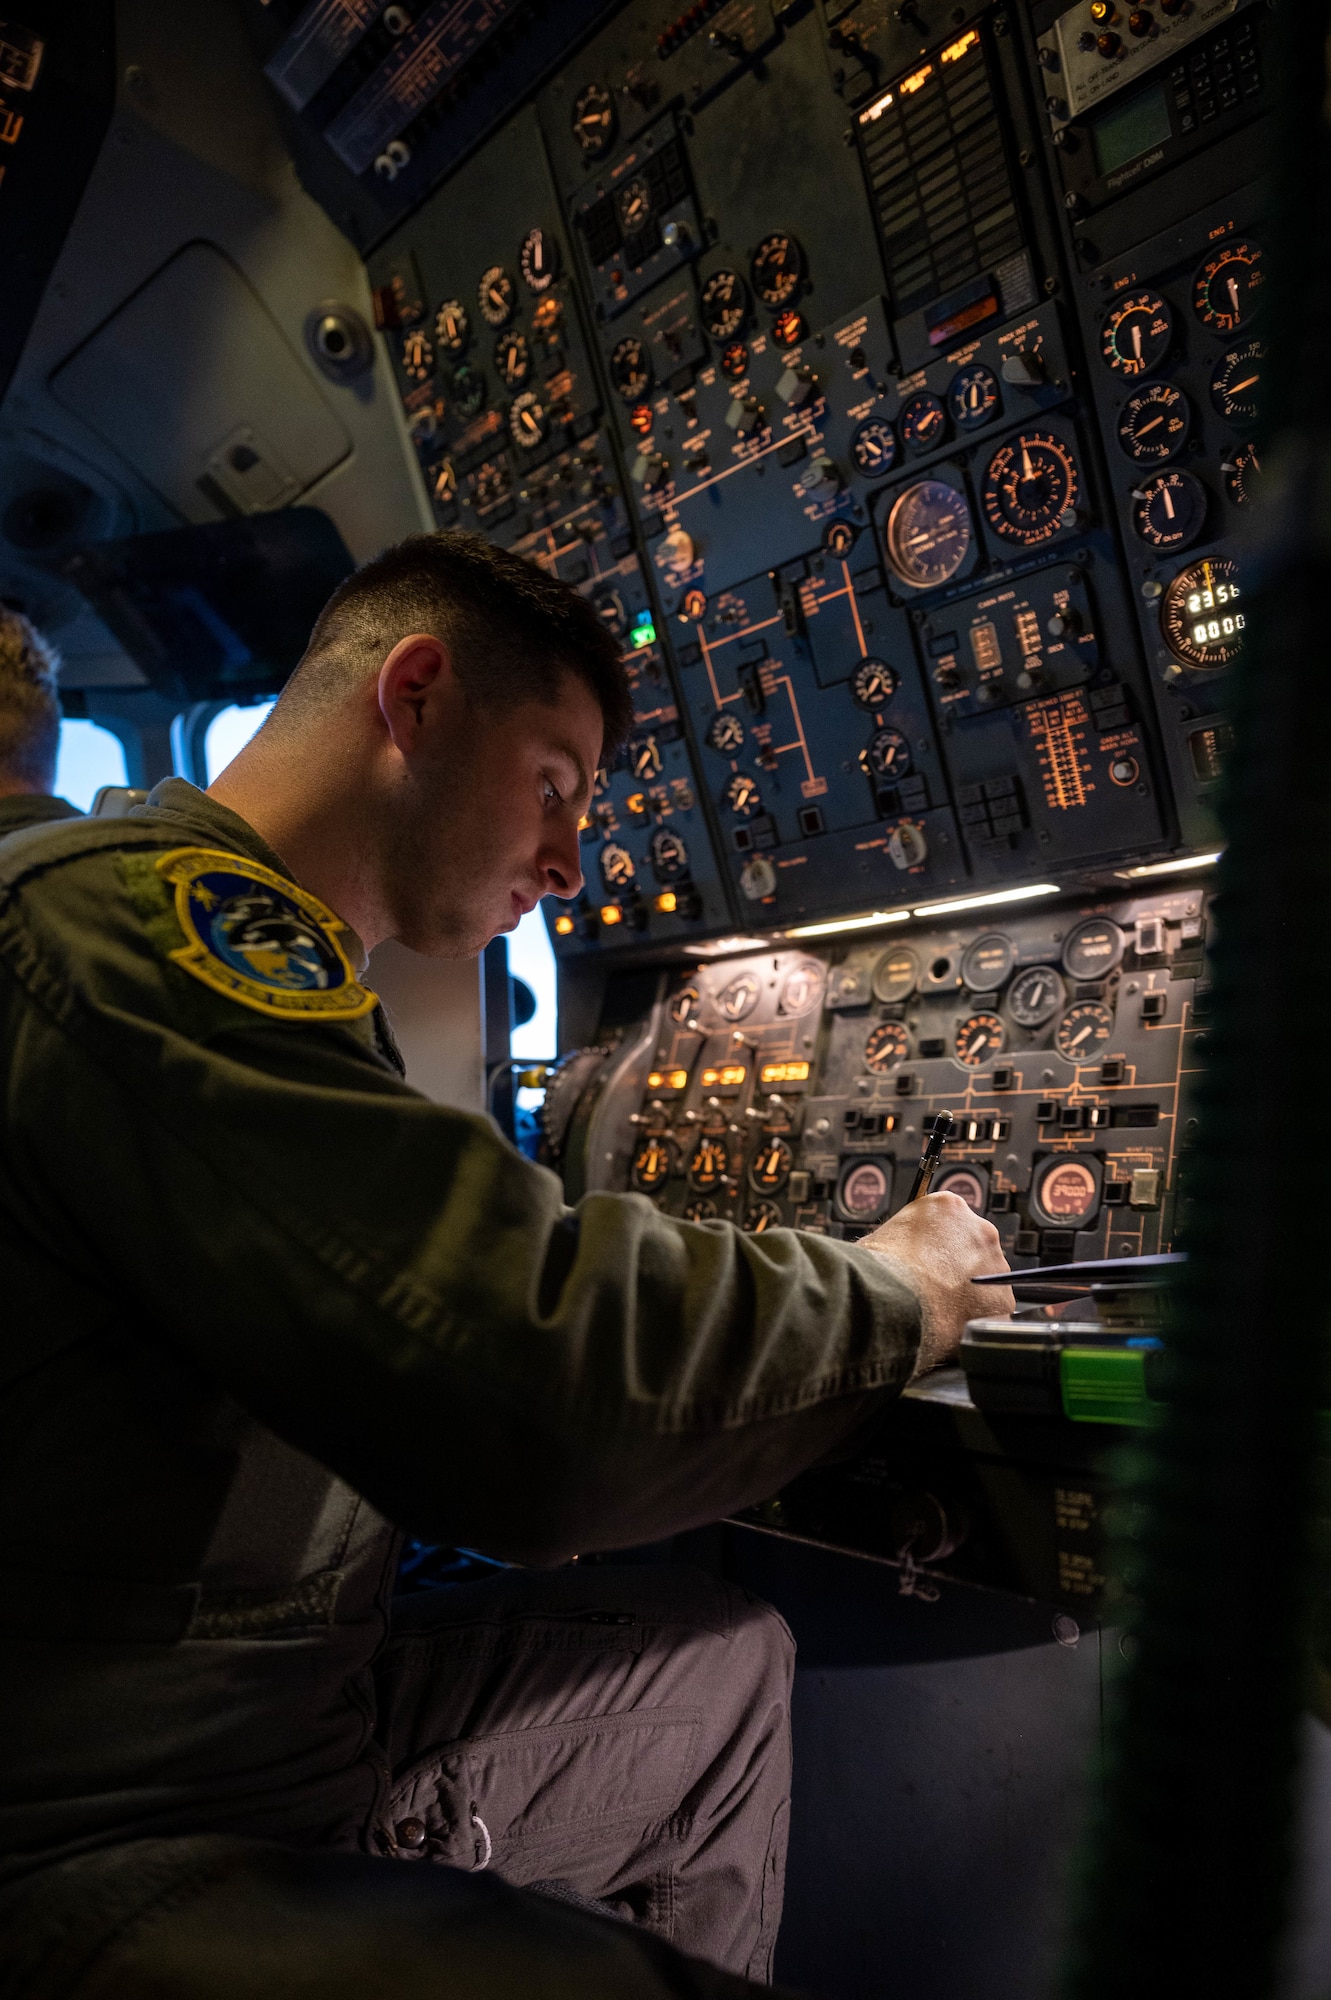 An Airman completes a preflight checklist in a cockpit of an aircraft